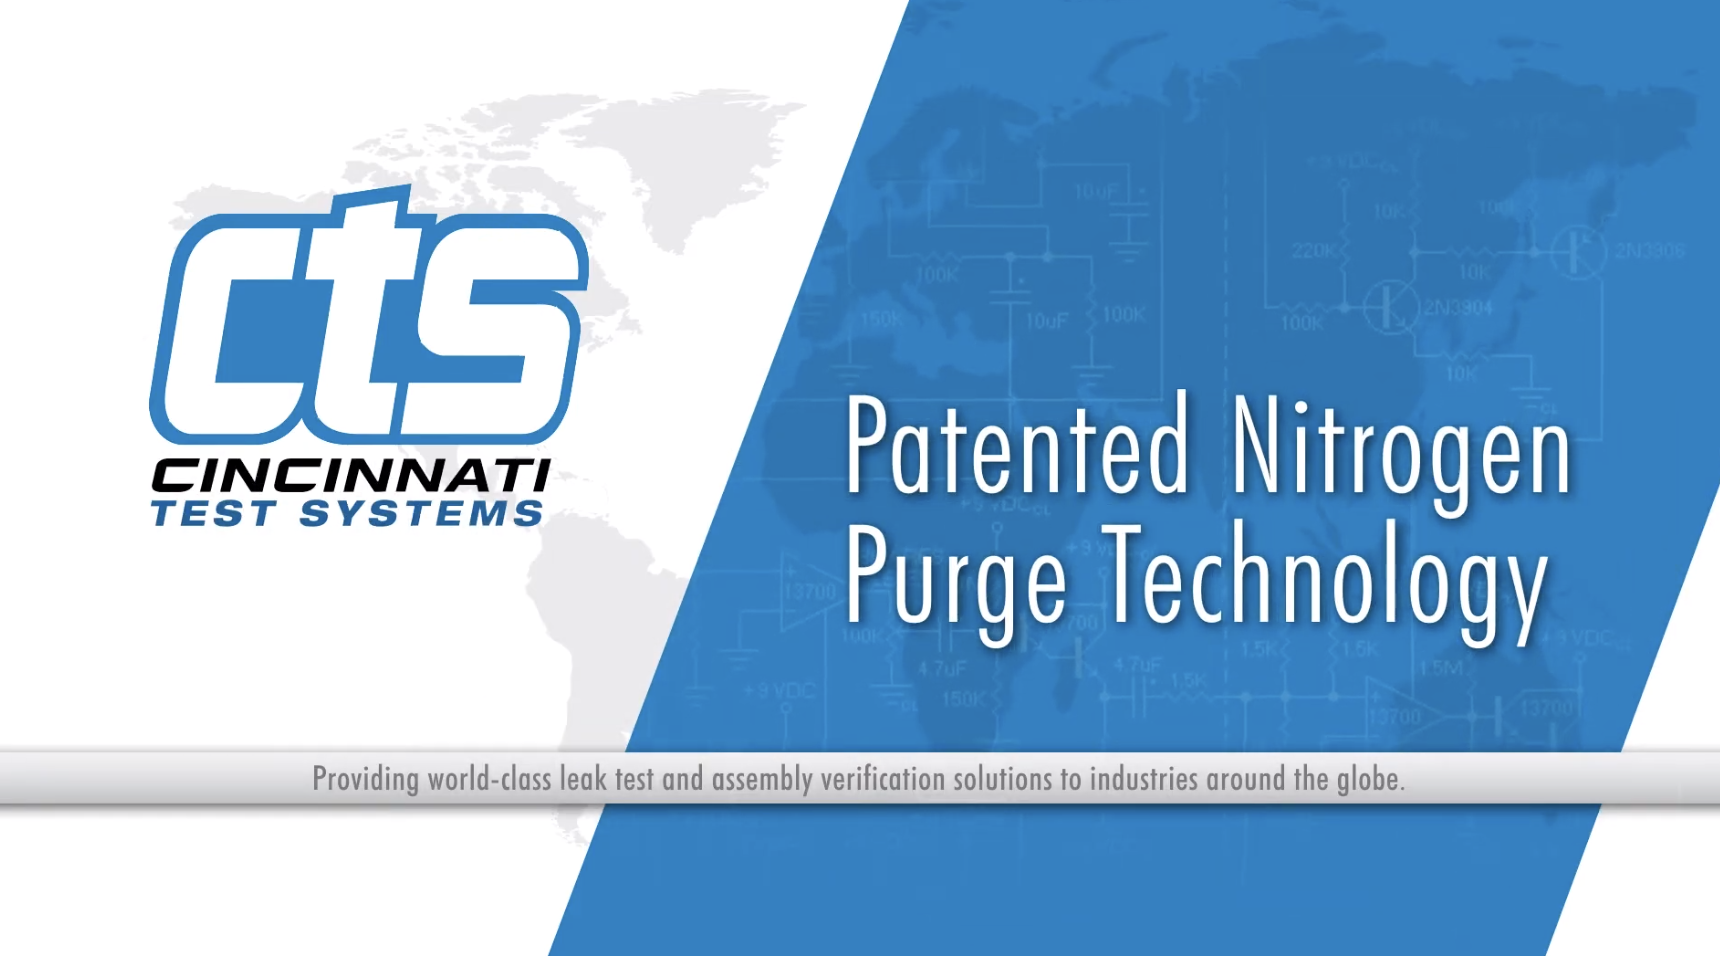 Nitrogen Purge Technology Video